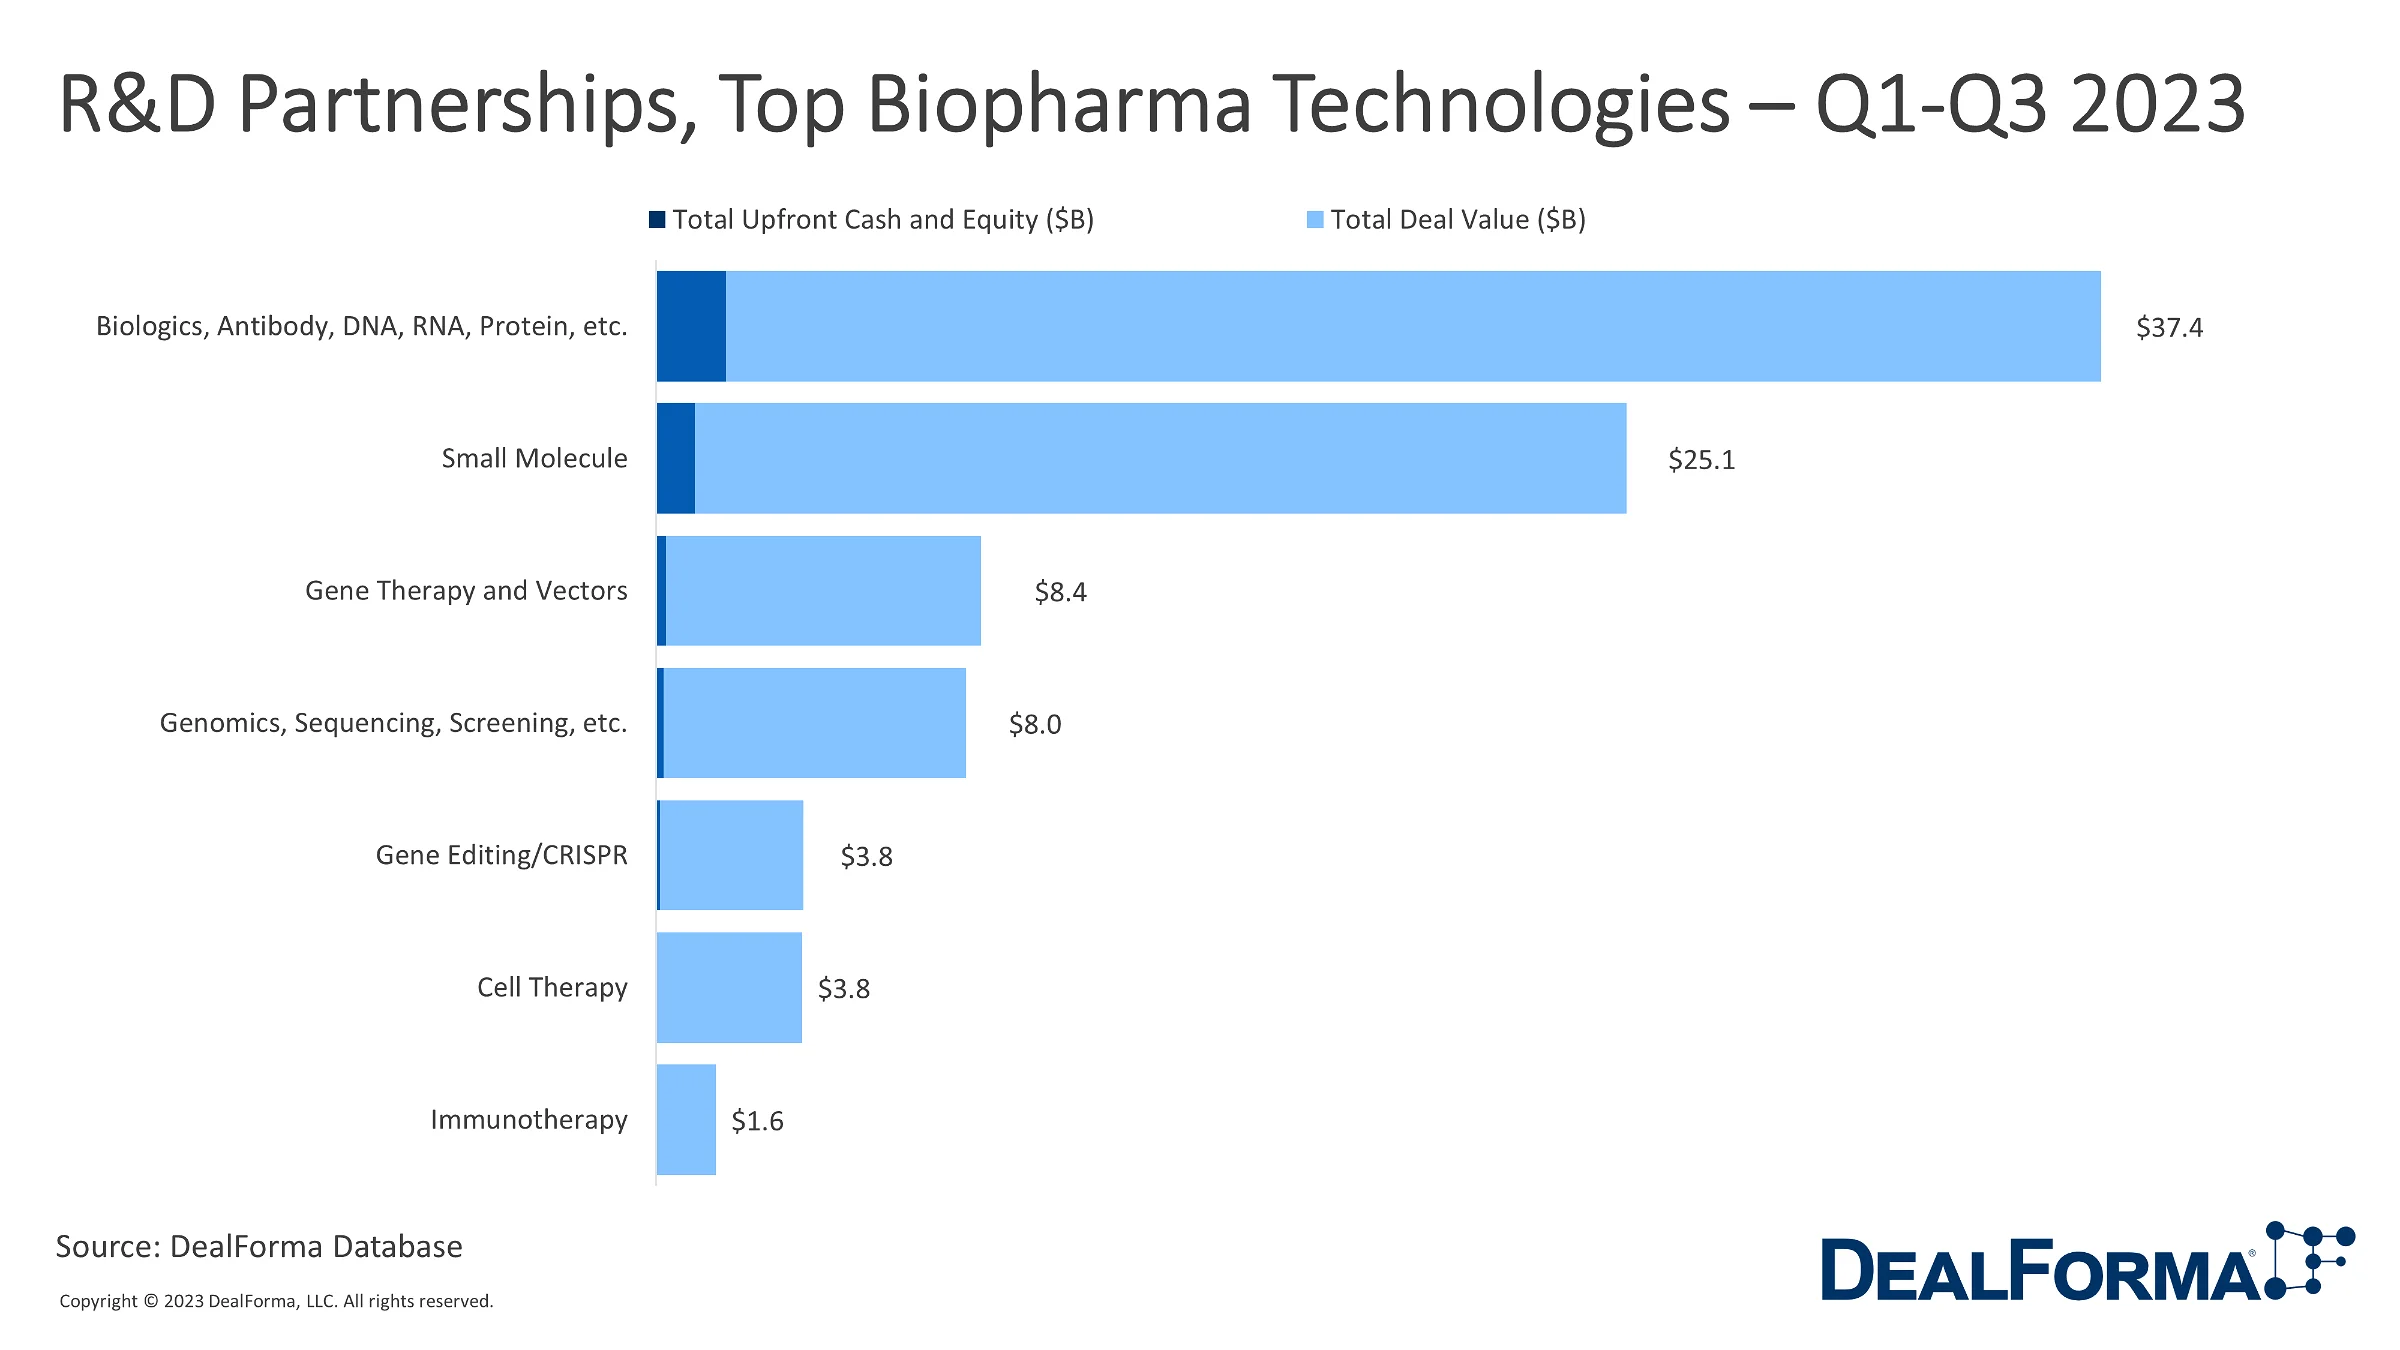 RD Partnerships For The Top Biopharma Technologies Through Q3 2023